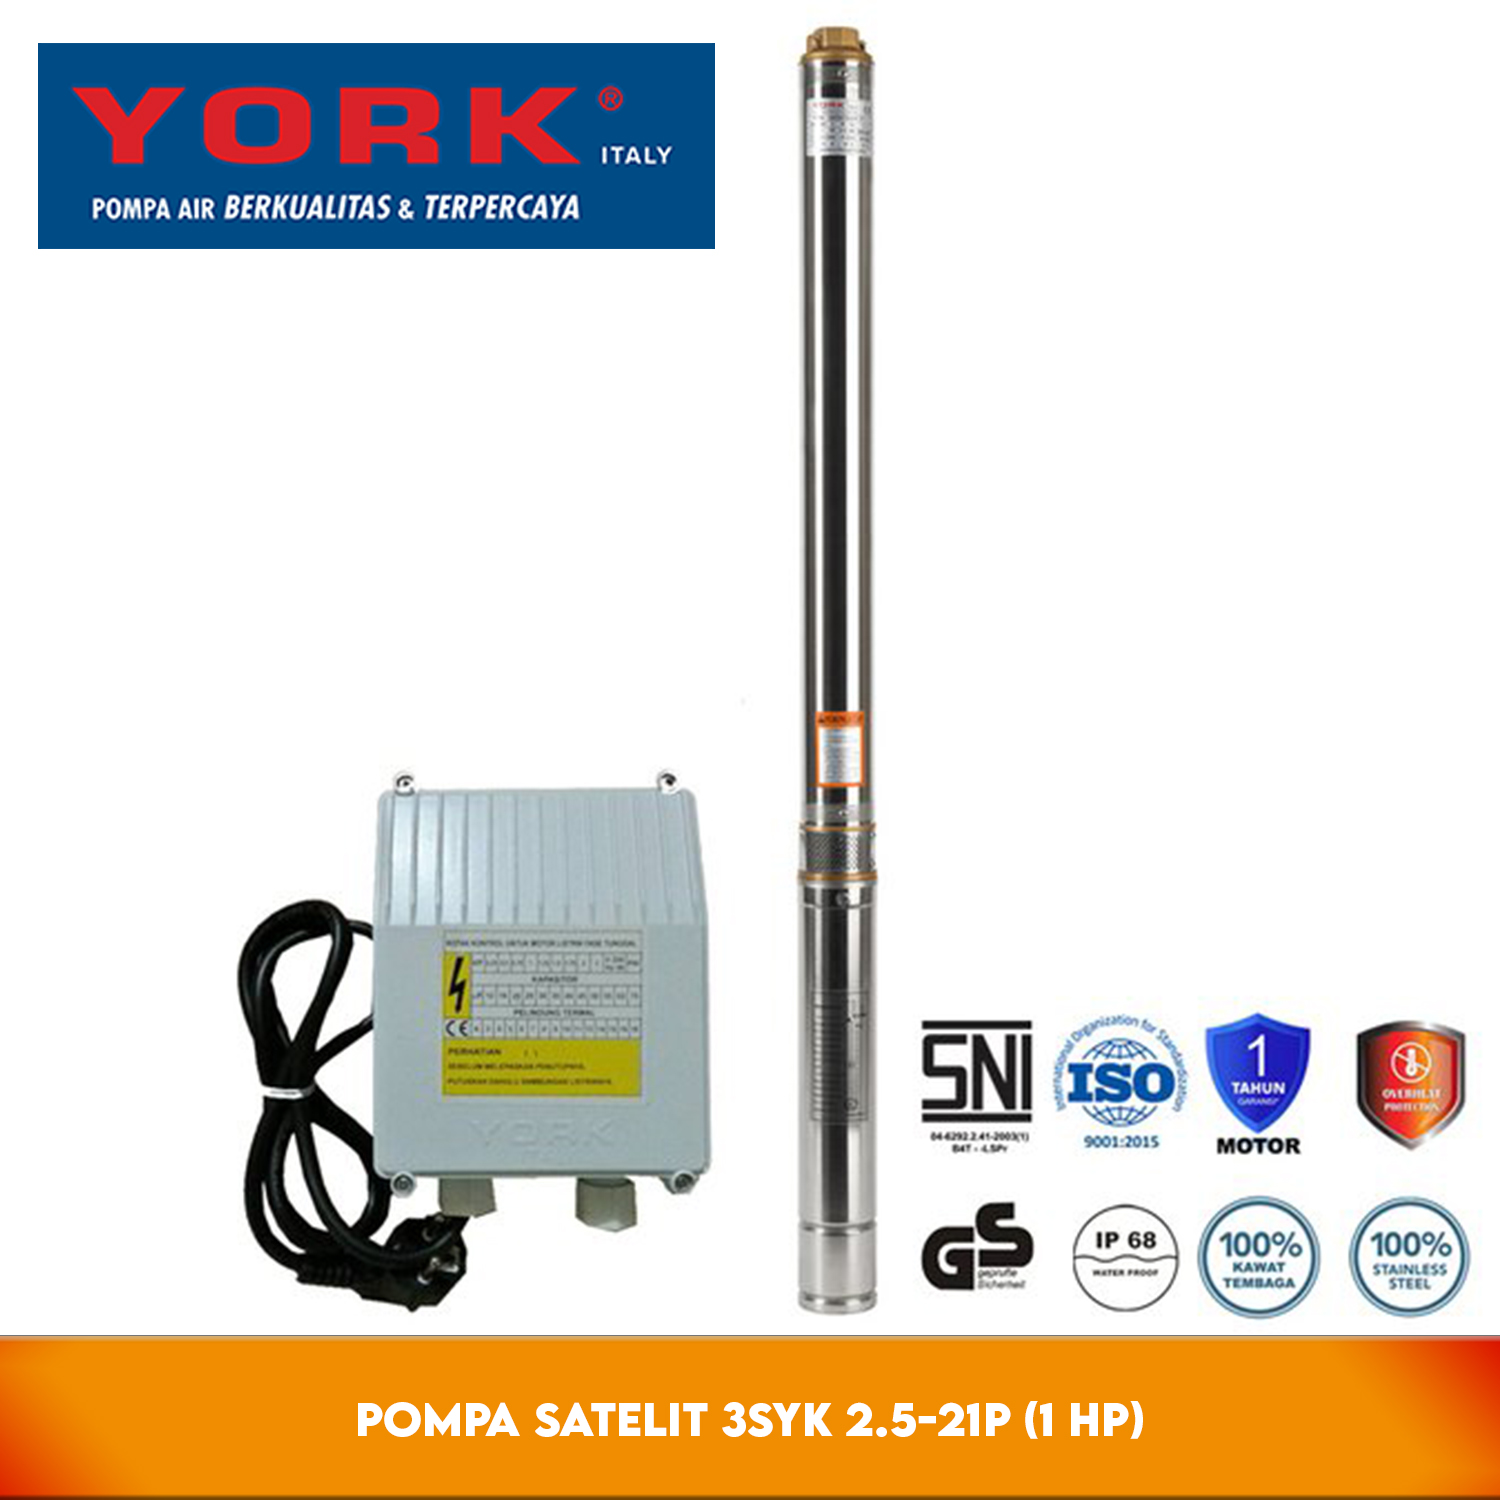 York 3SYK 2.5-21P 1 HP + C.BOX + 50 M - Pompa Satelit 